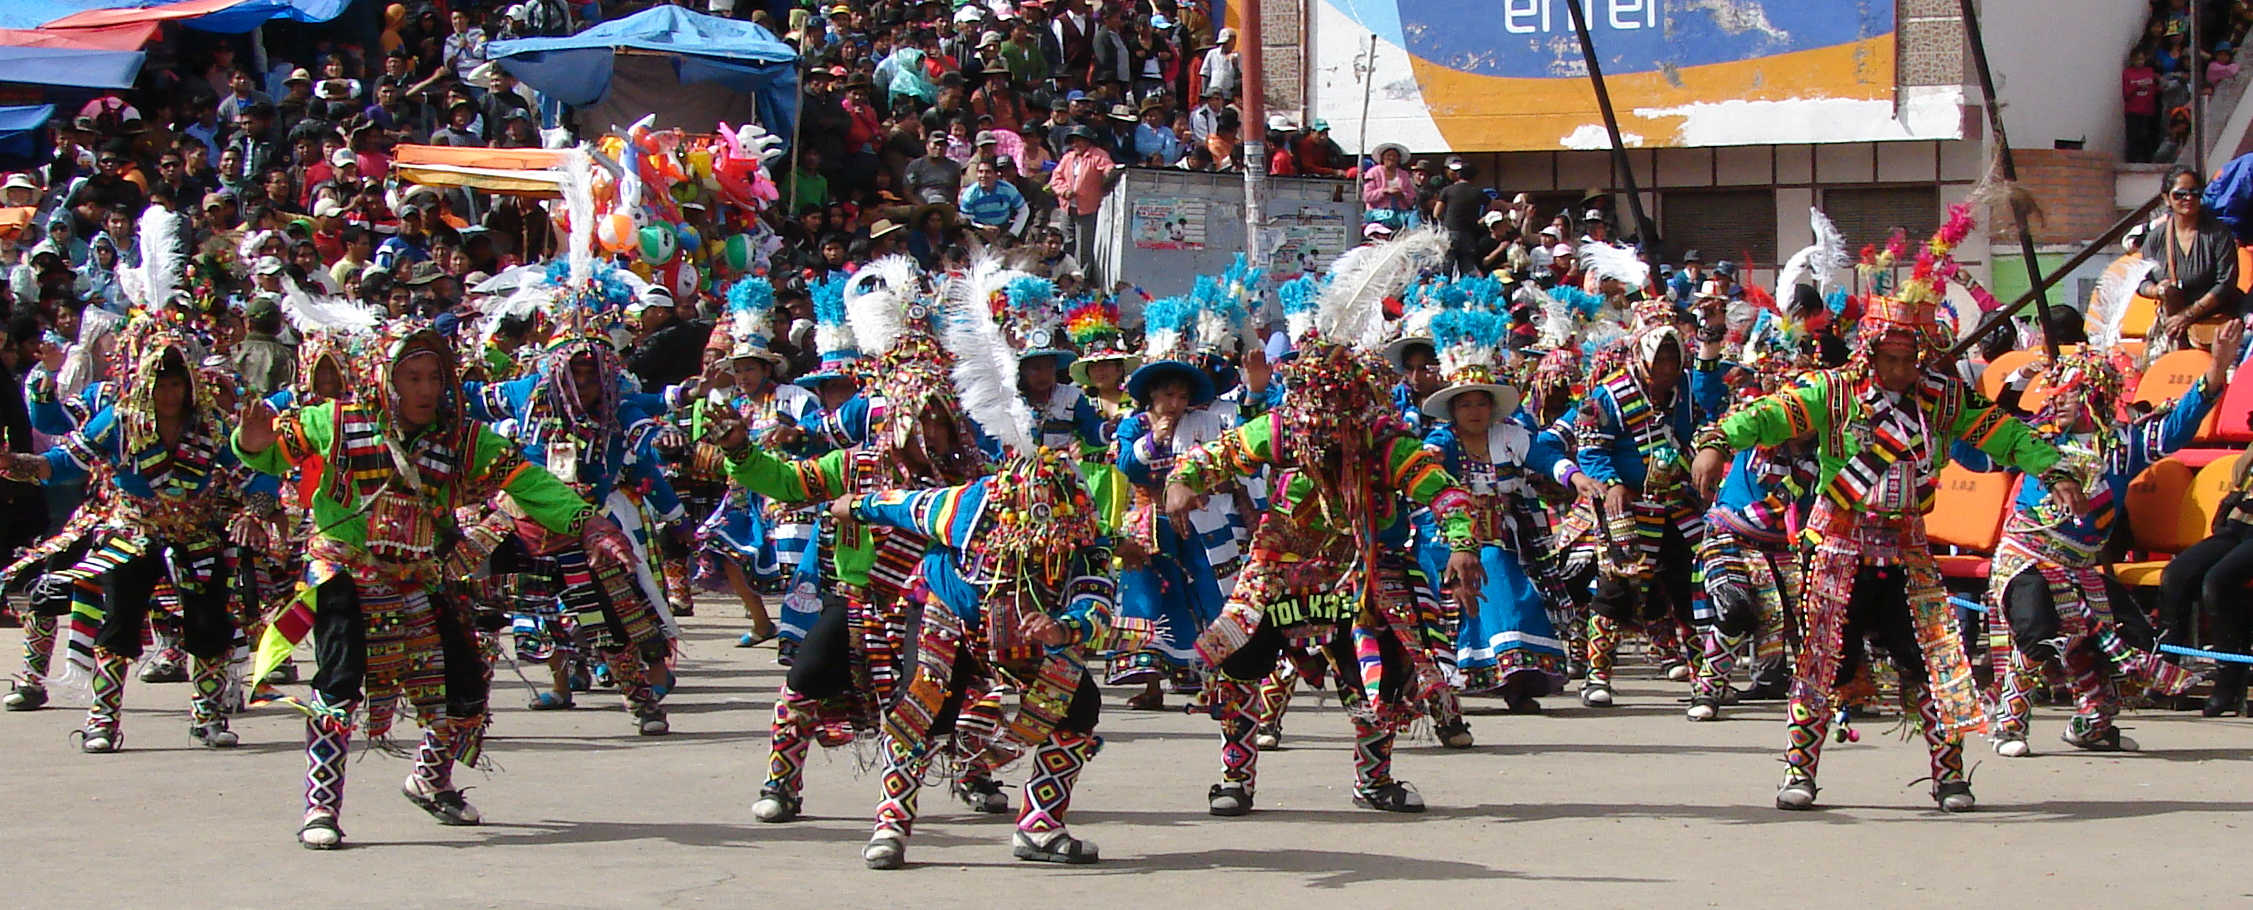 Foto: Carnaval - Oruro, Bolivia